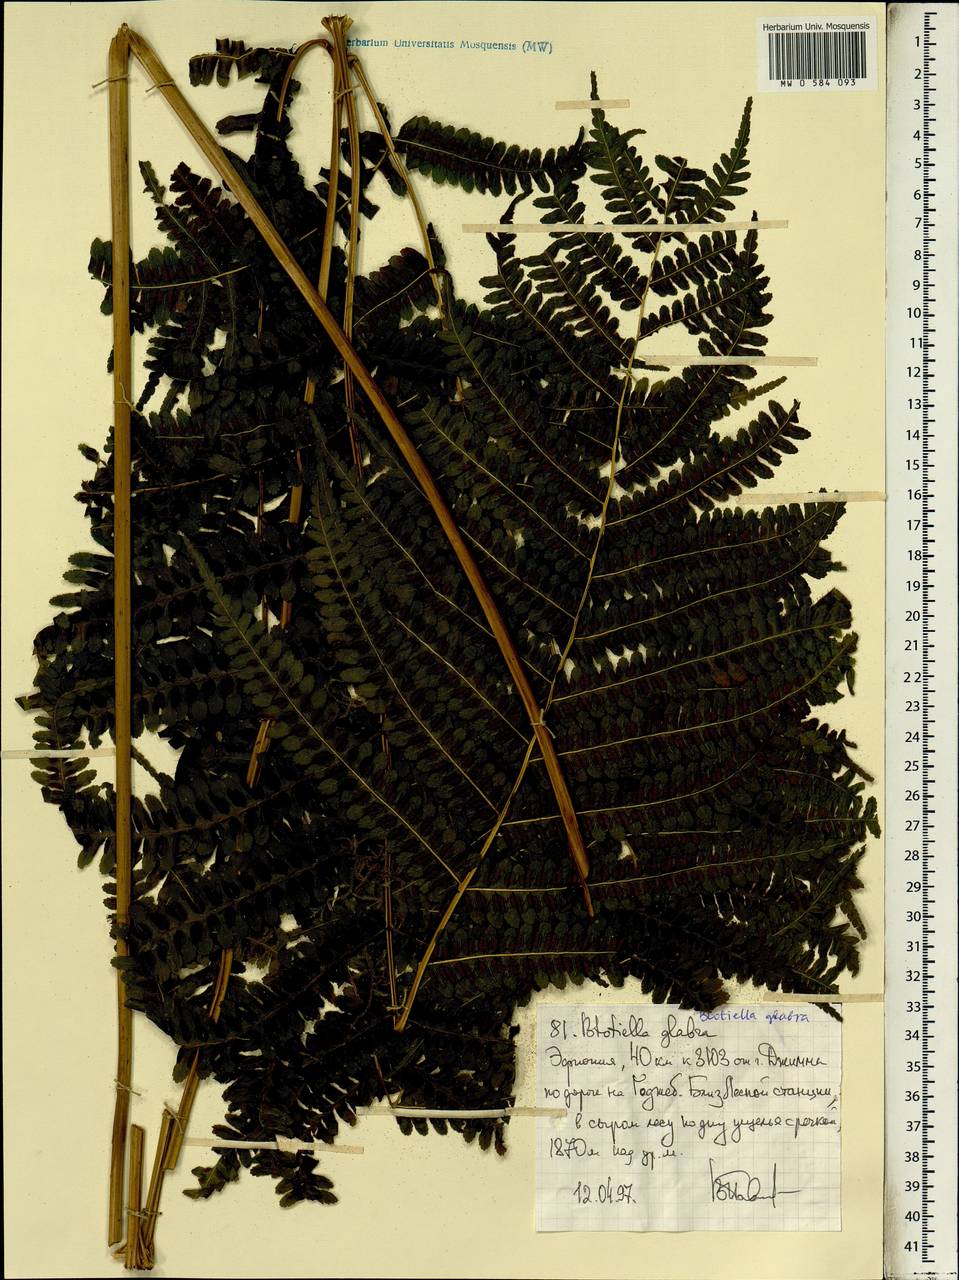 Blotiella glabra (Bory) R. Tryon, Africa (AFR) (Ethiopia)